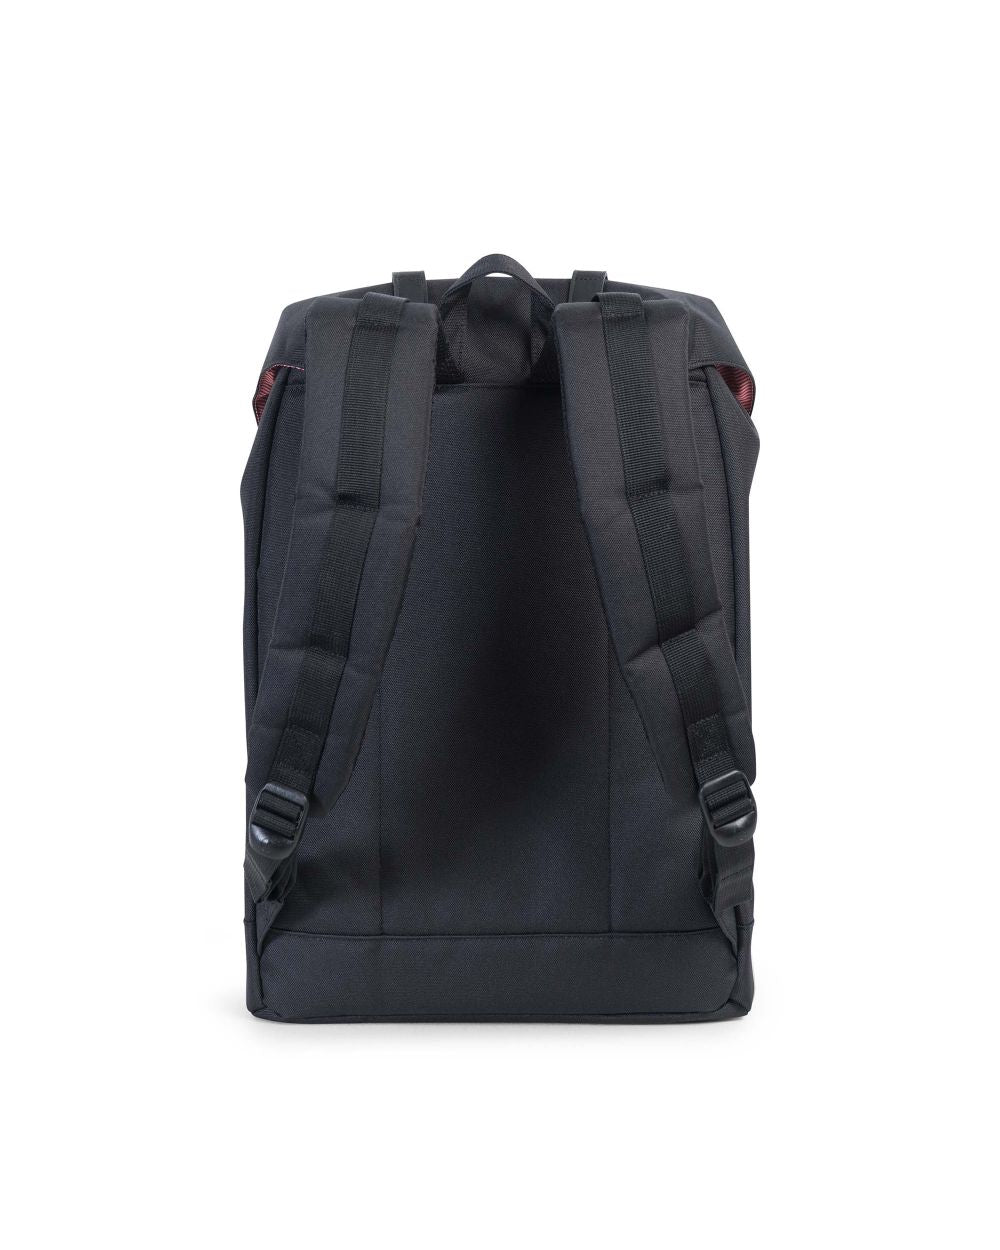 Herschel Supply Co. - Retreat Backpack, Black/Black PU